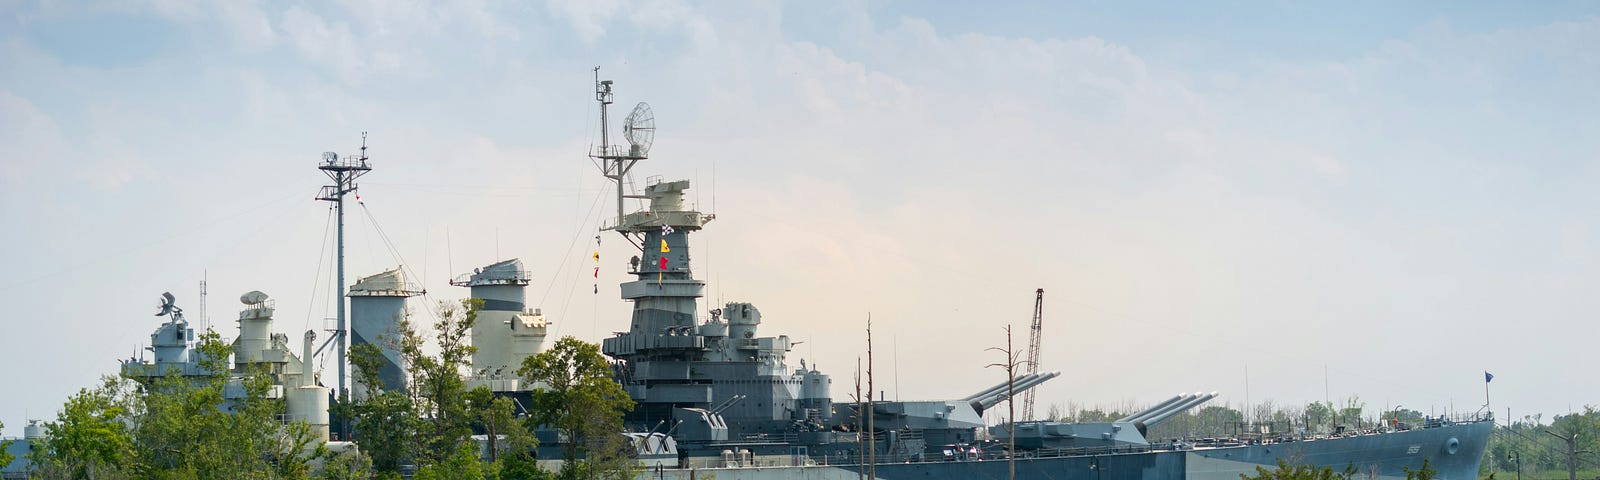 Photo of the Battleship USS North Carolina in Wilmington